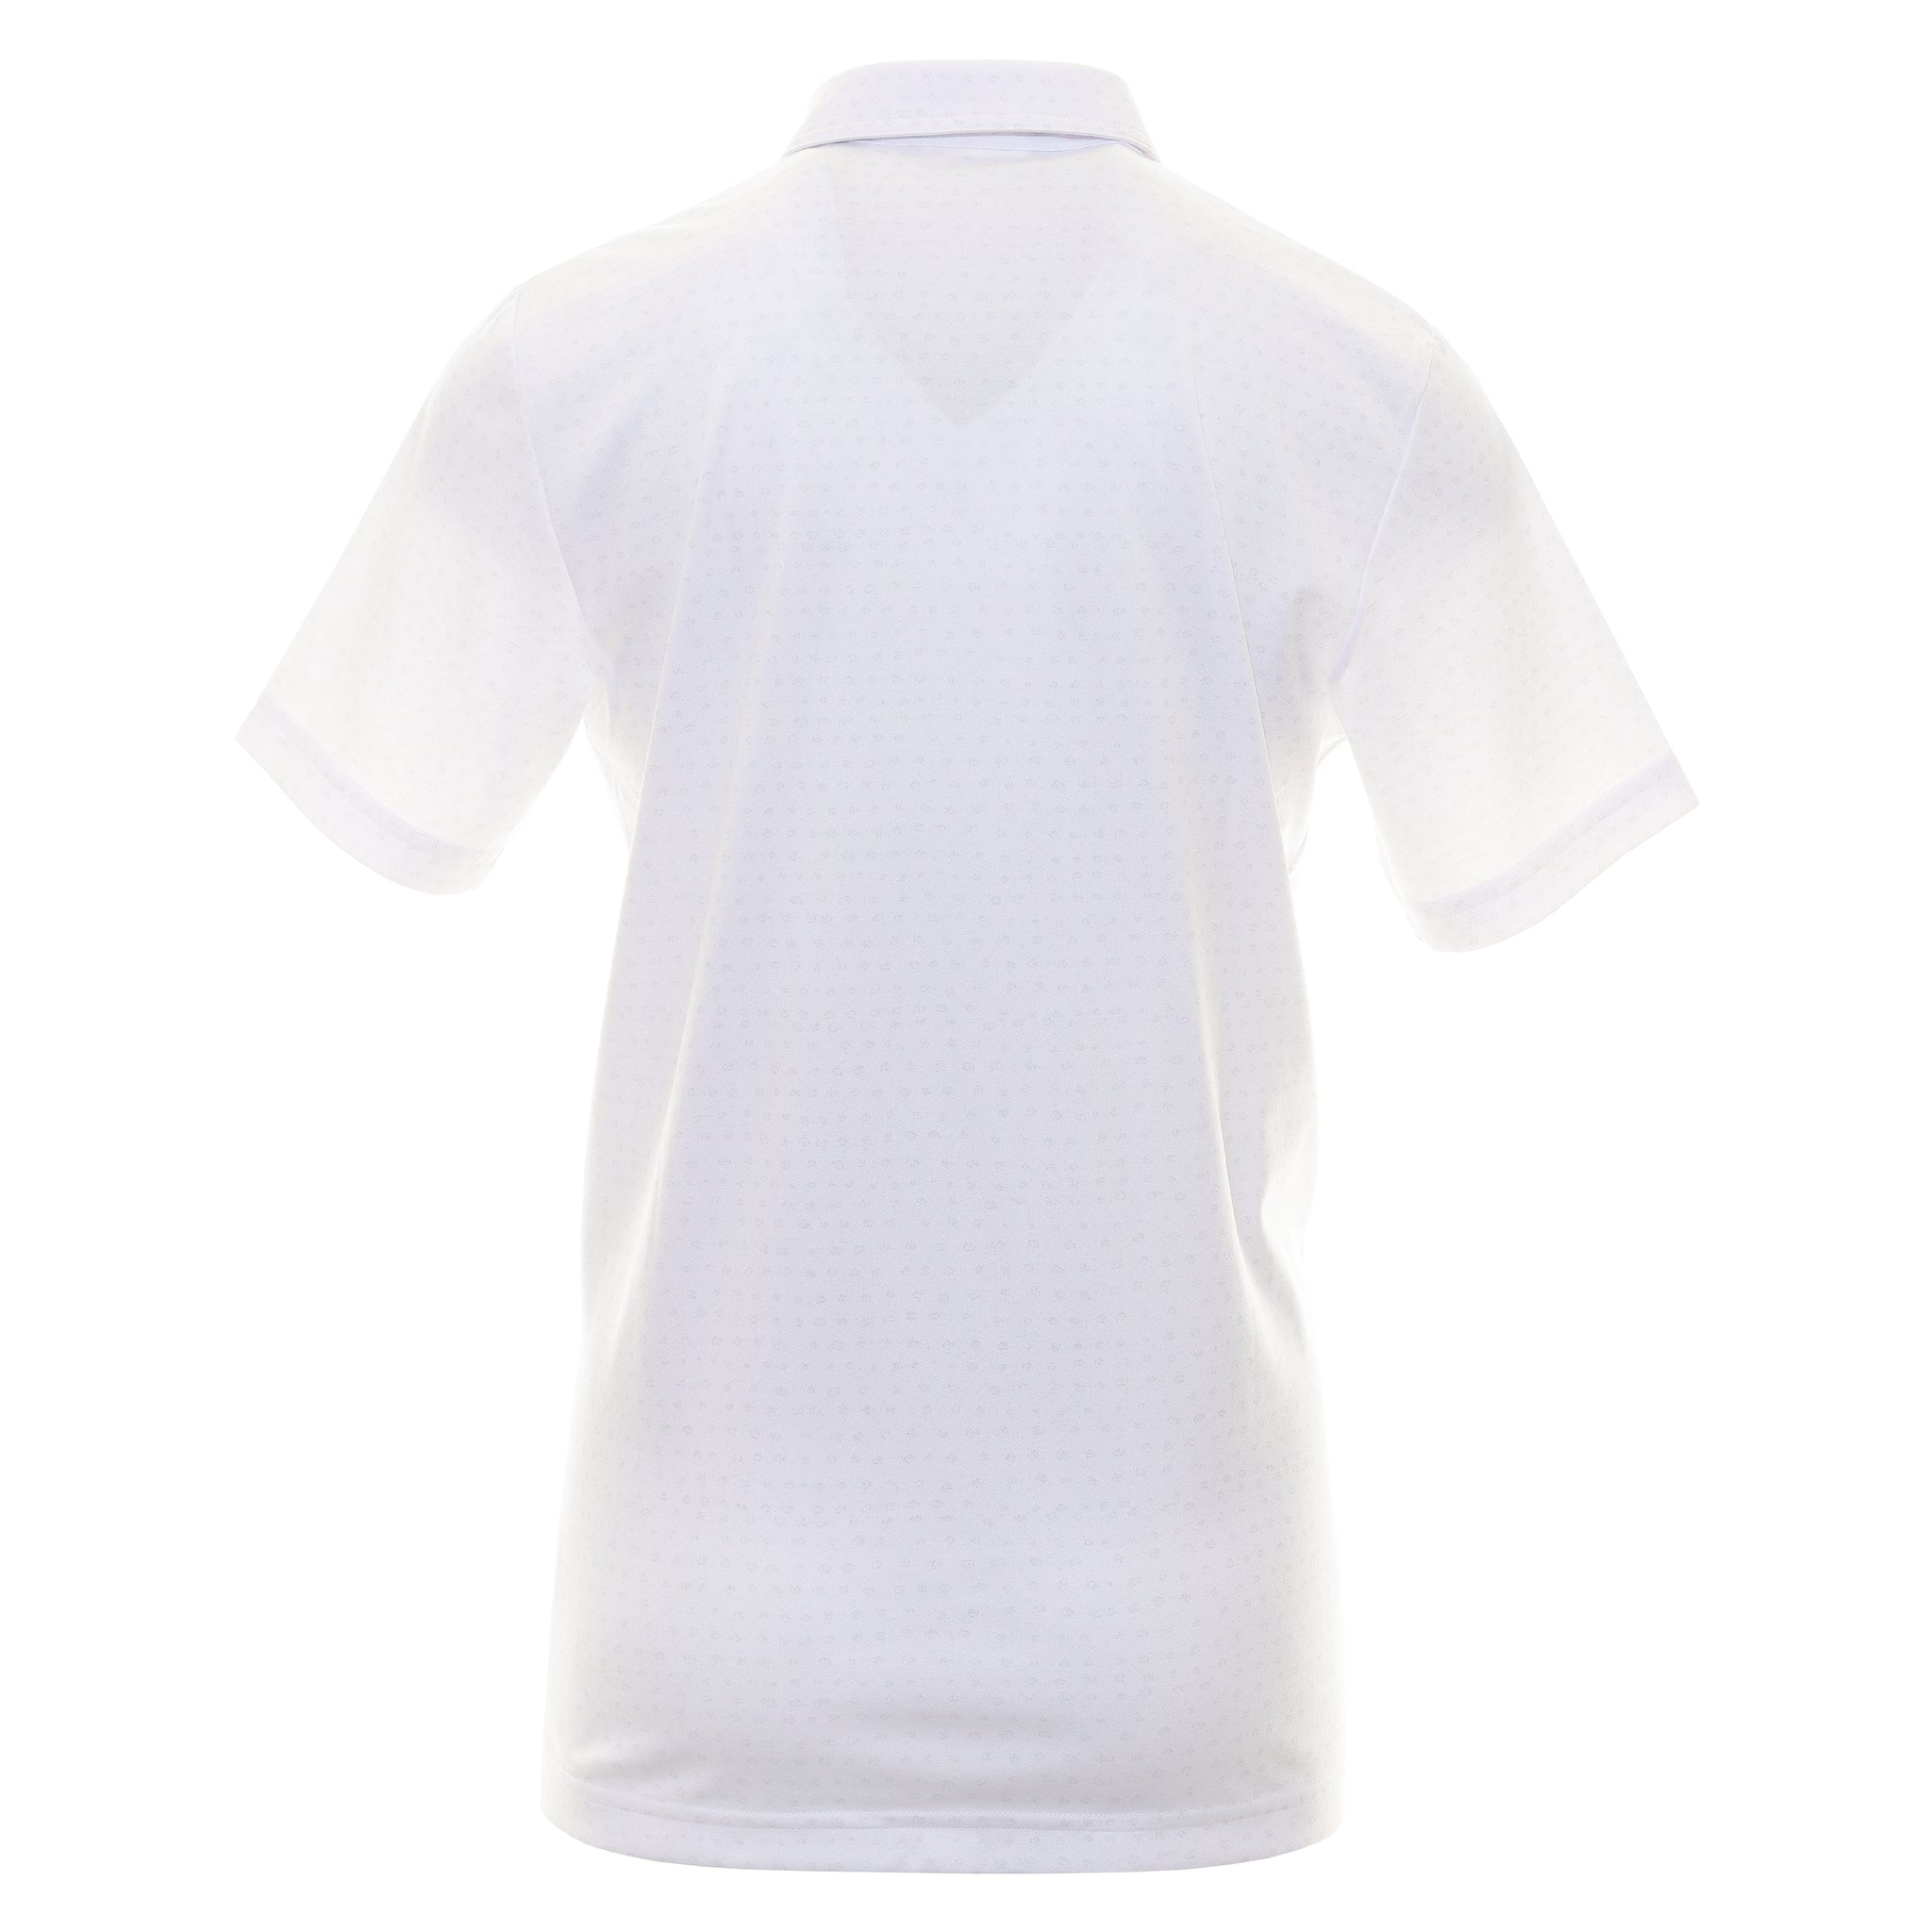 travismathew-freeze-frame-polo-shirt-1mz437-white